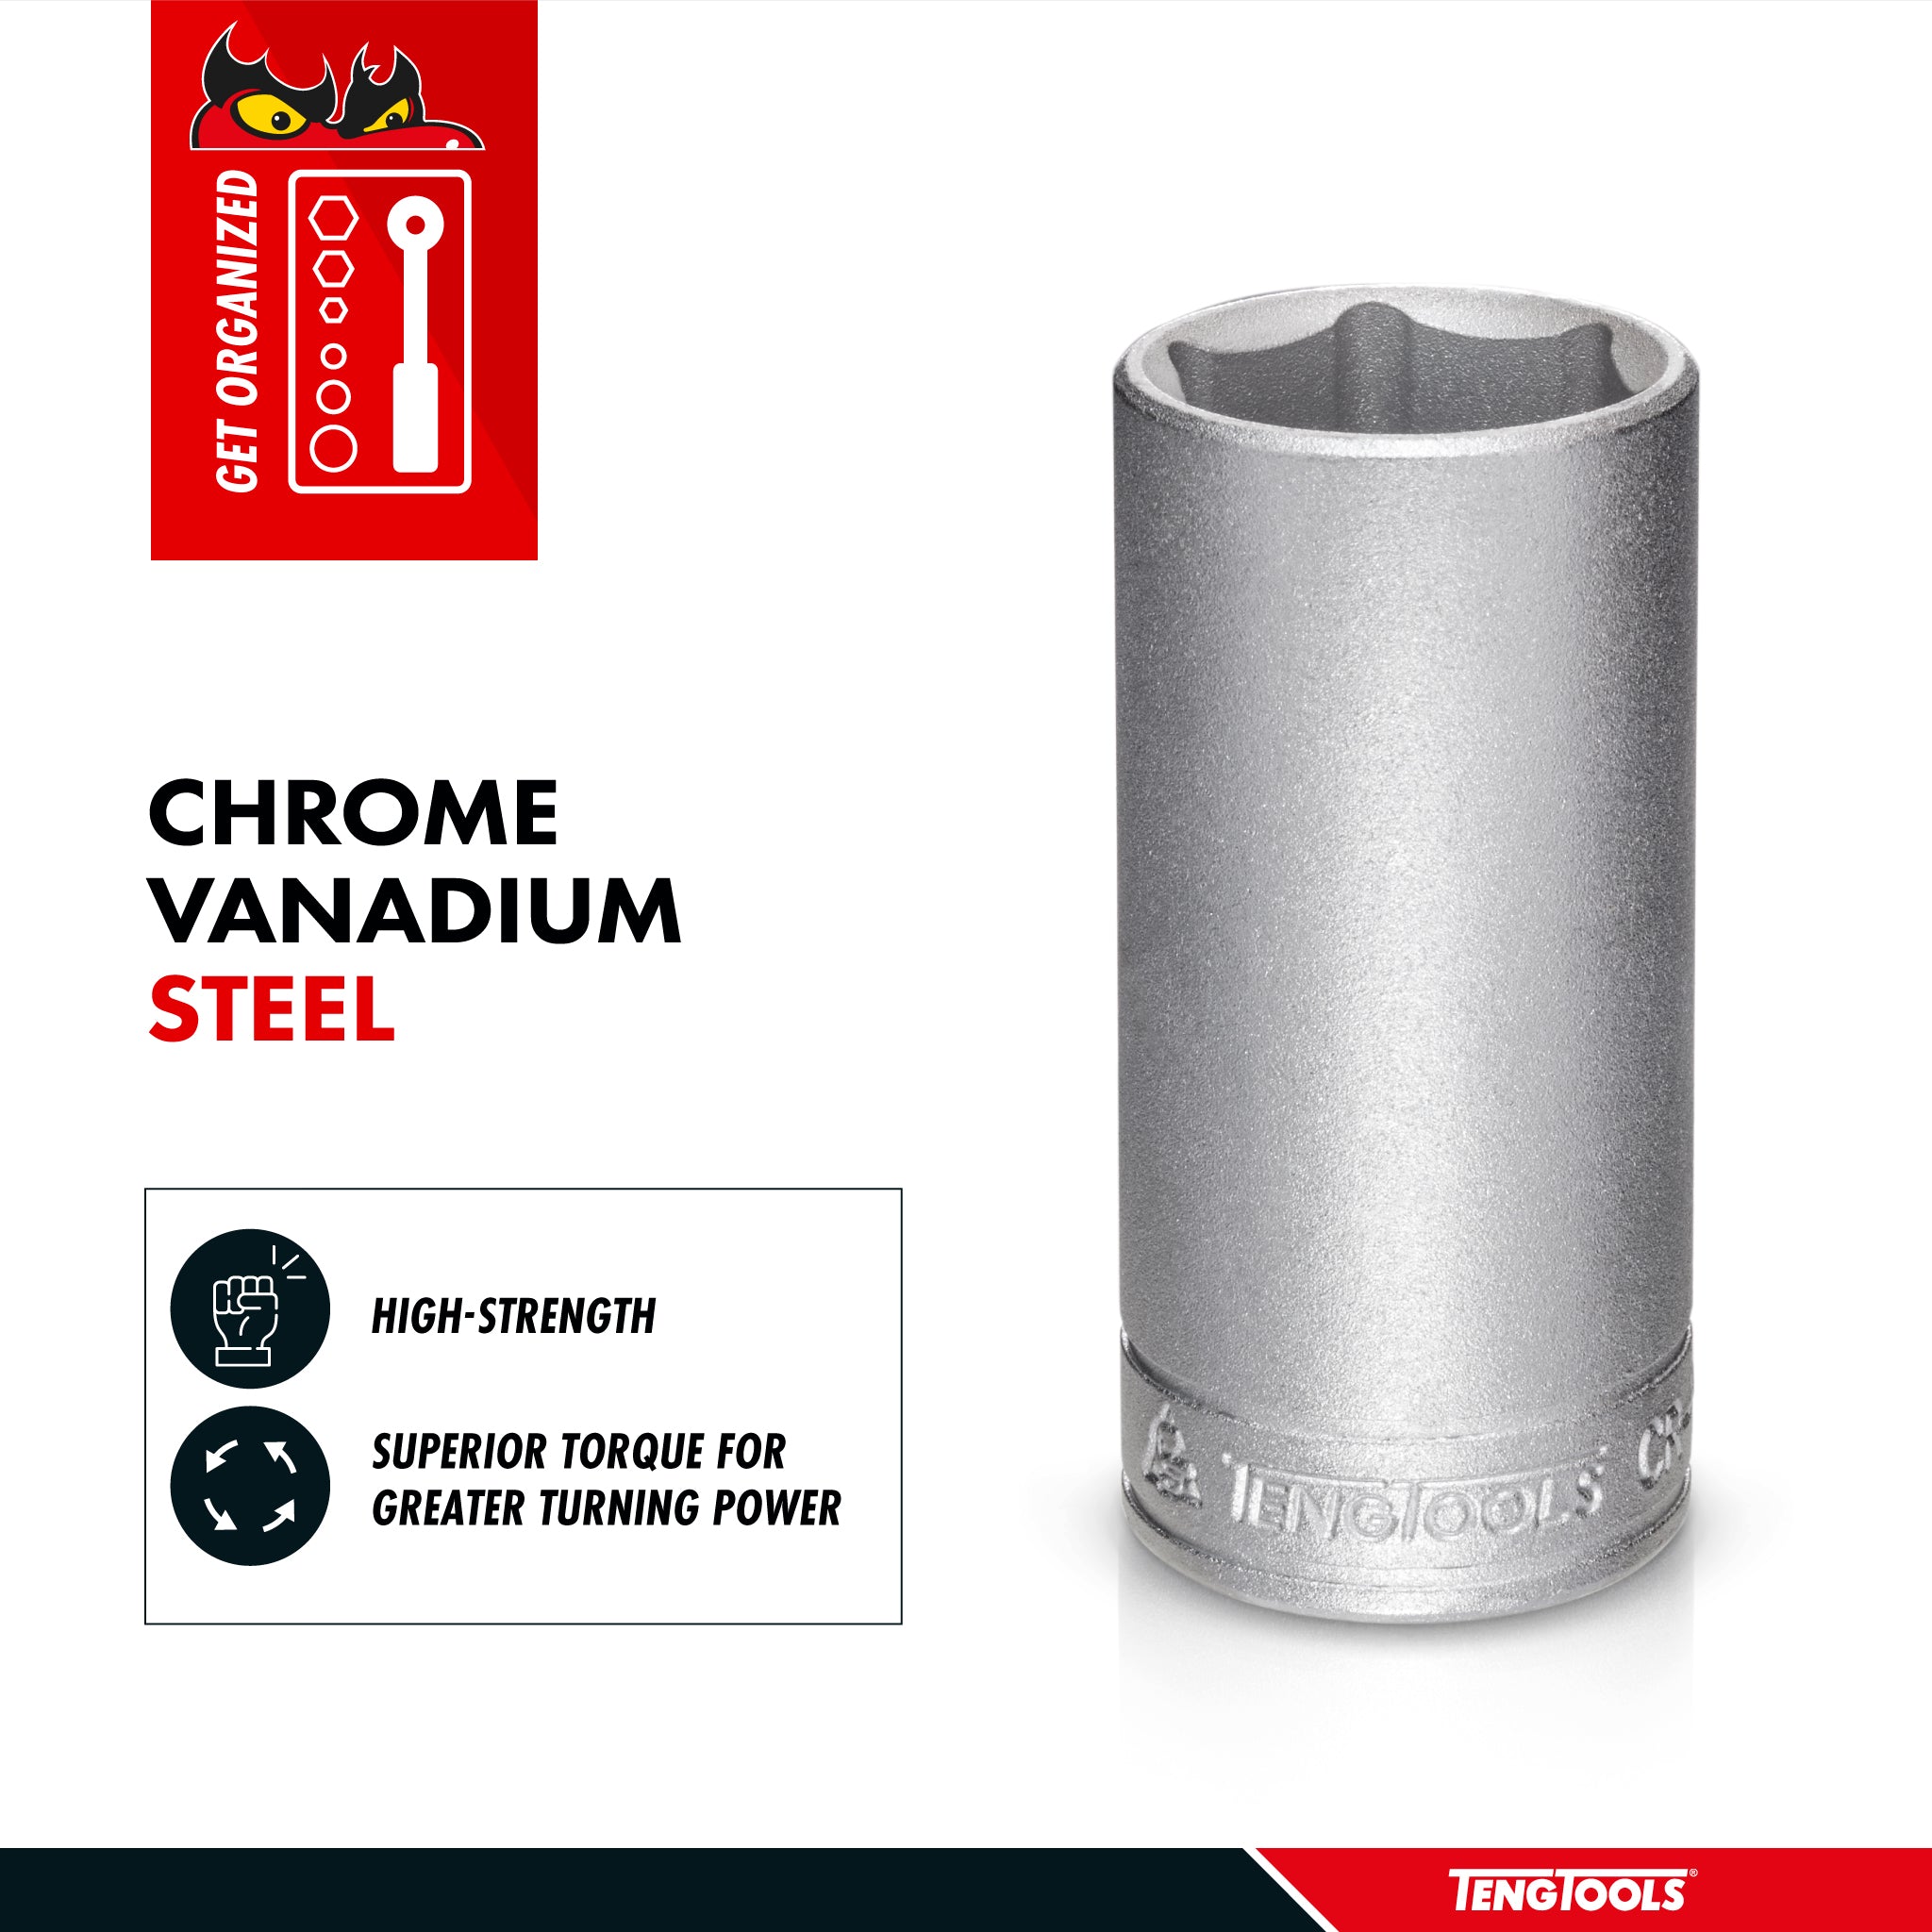 Teng Tools 3/8 Inch Drive 6 Point Metric Deep Chrome Vanadium Sockets - 10mm